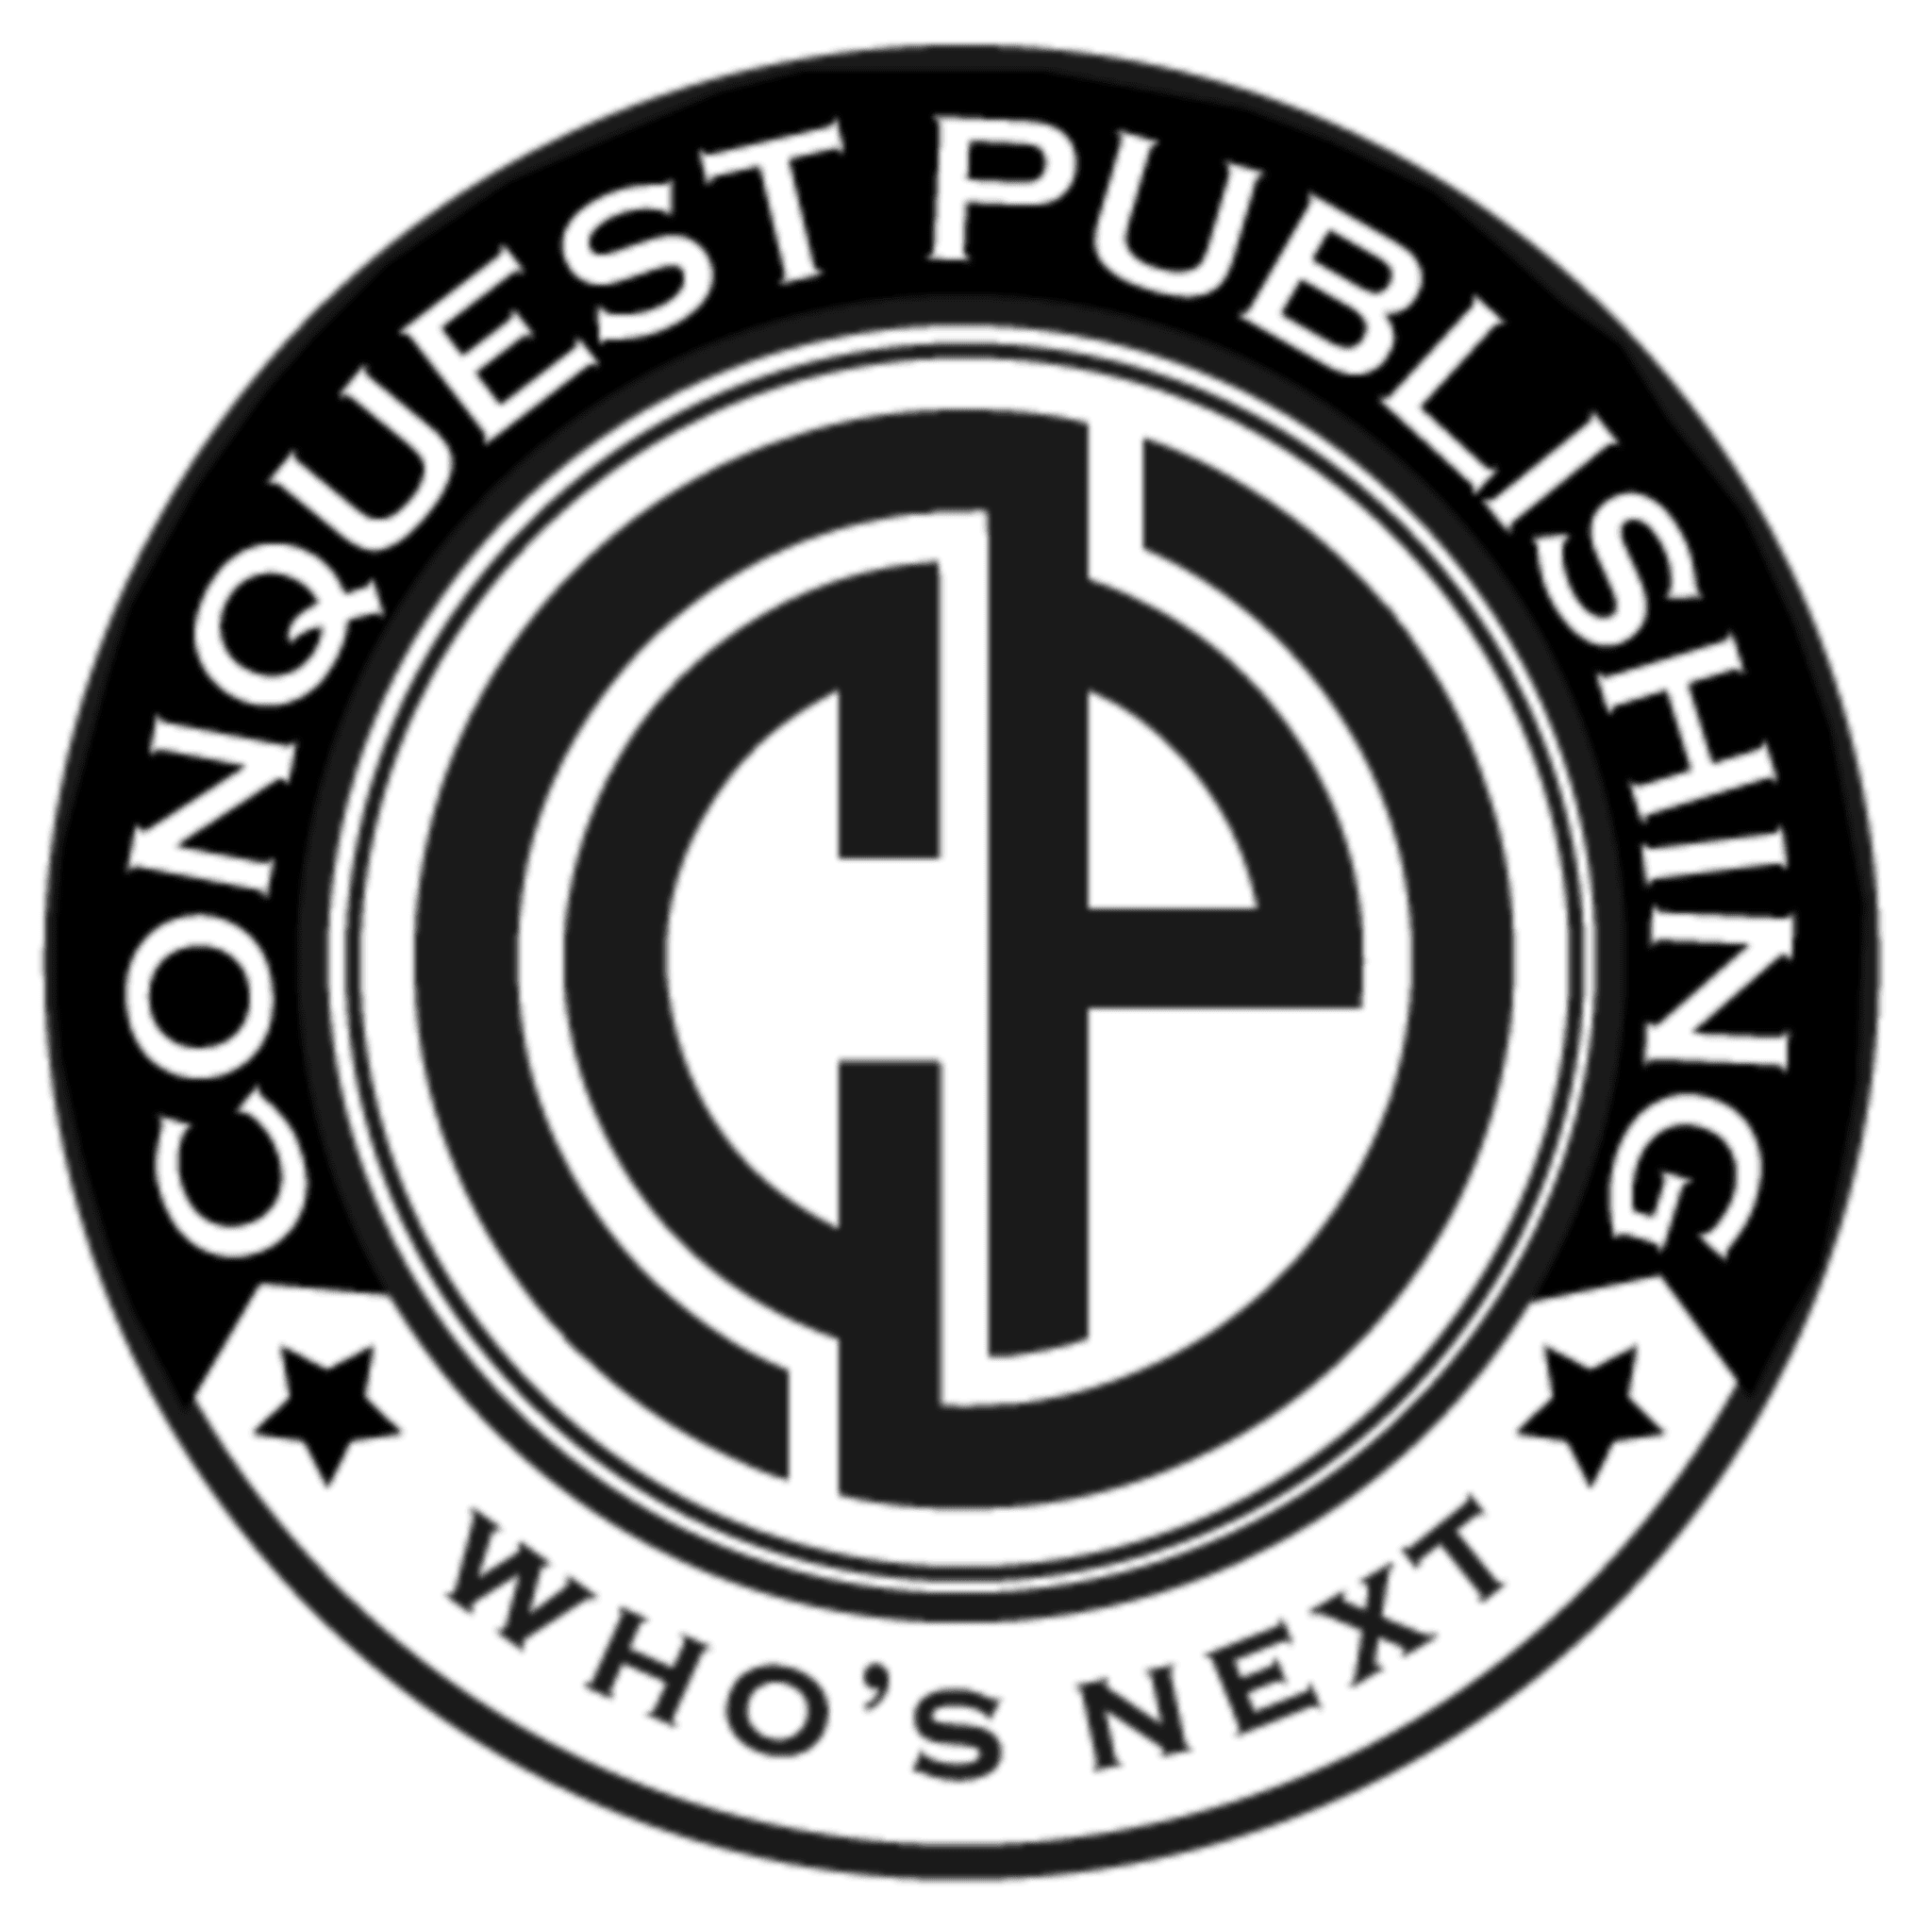 Conquest Publishing